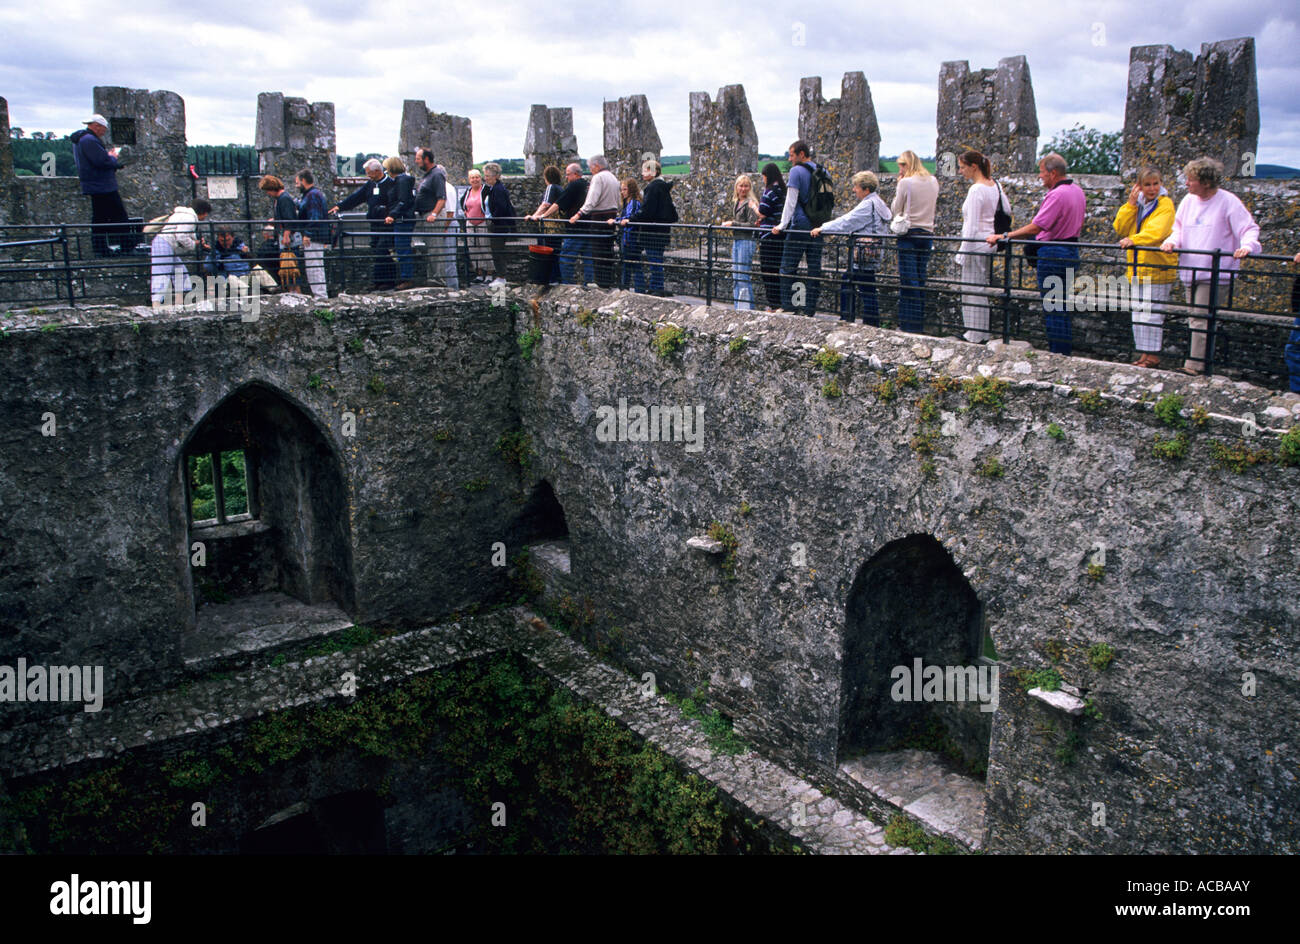 Queue to kiss the Blarney Stone, Blarney Castle, Co Cork, Republic of Ireland. Stock Photo